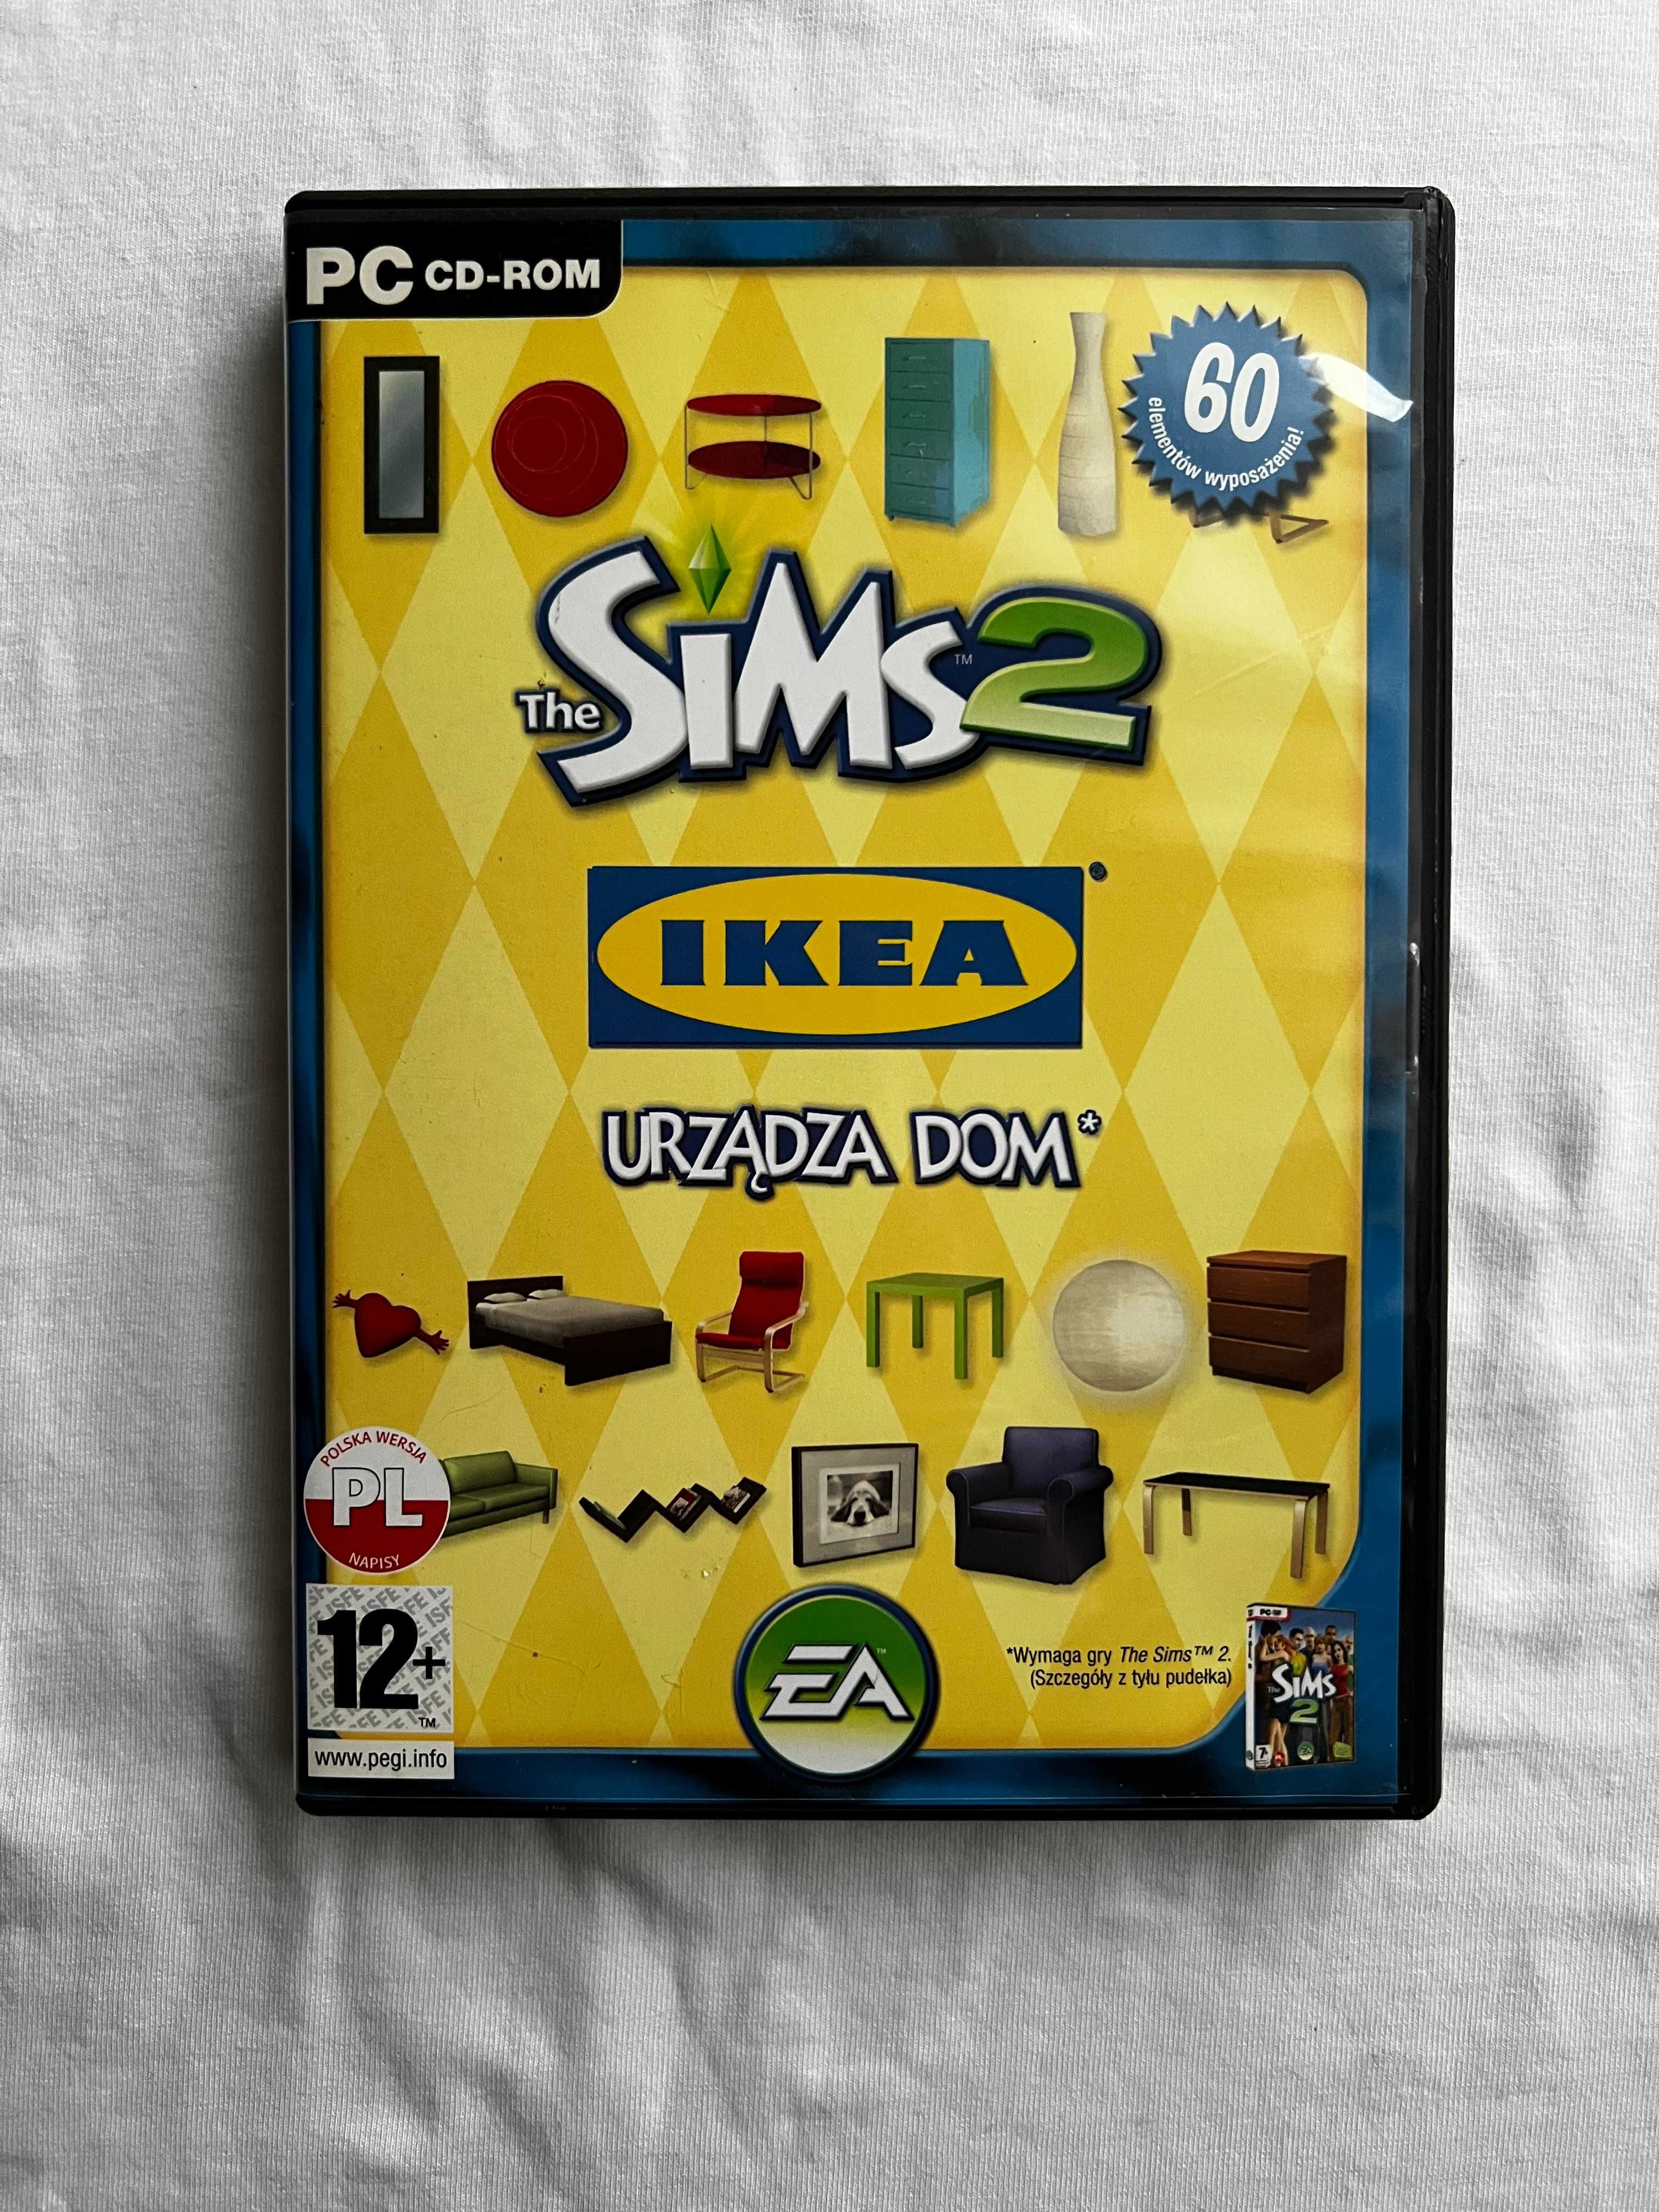 The Sims 2 - IKEA (Akcesoria) [UNIKAT! STAN IDEALNY!]